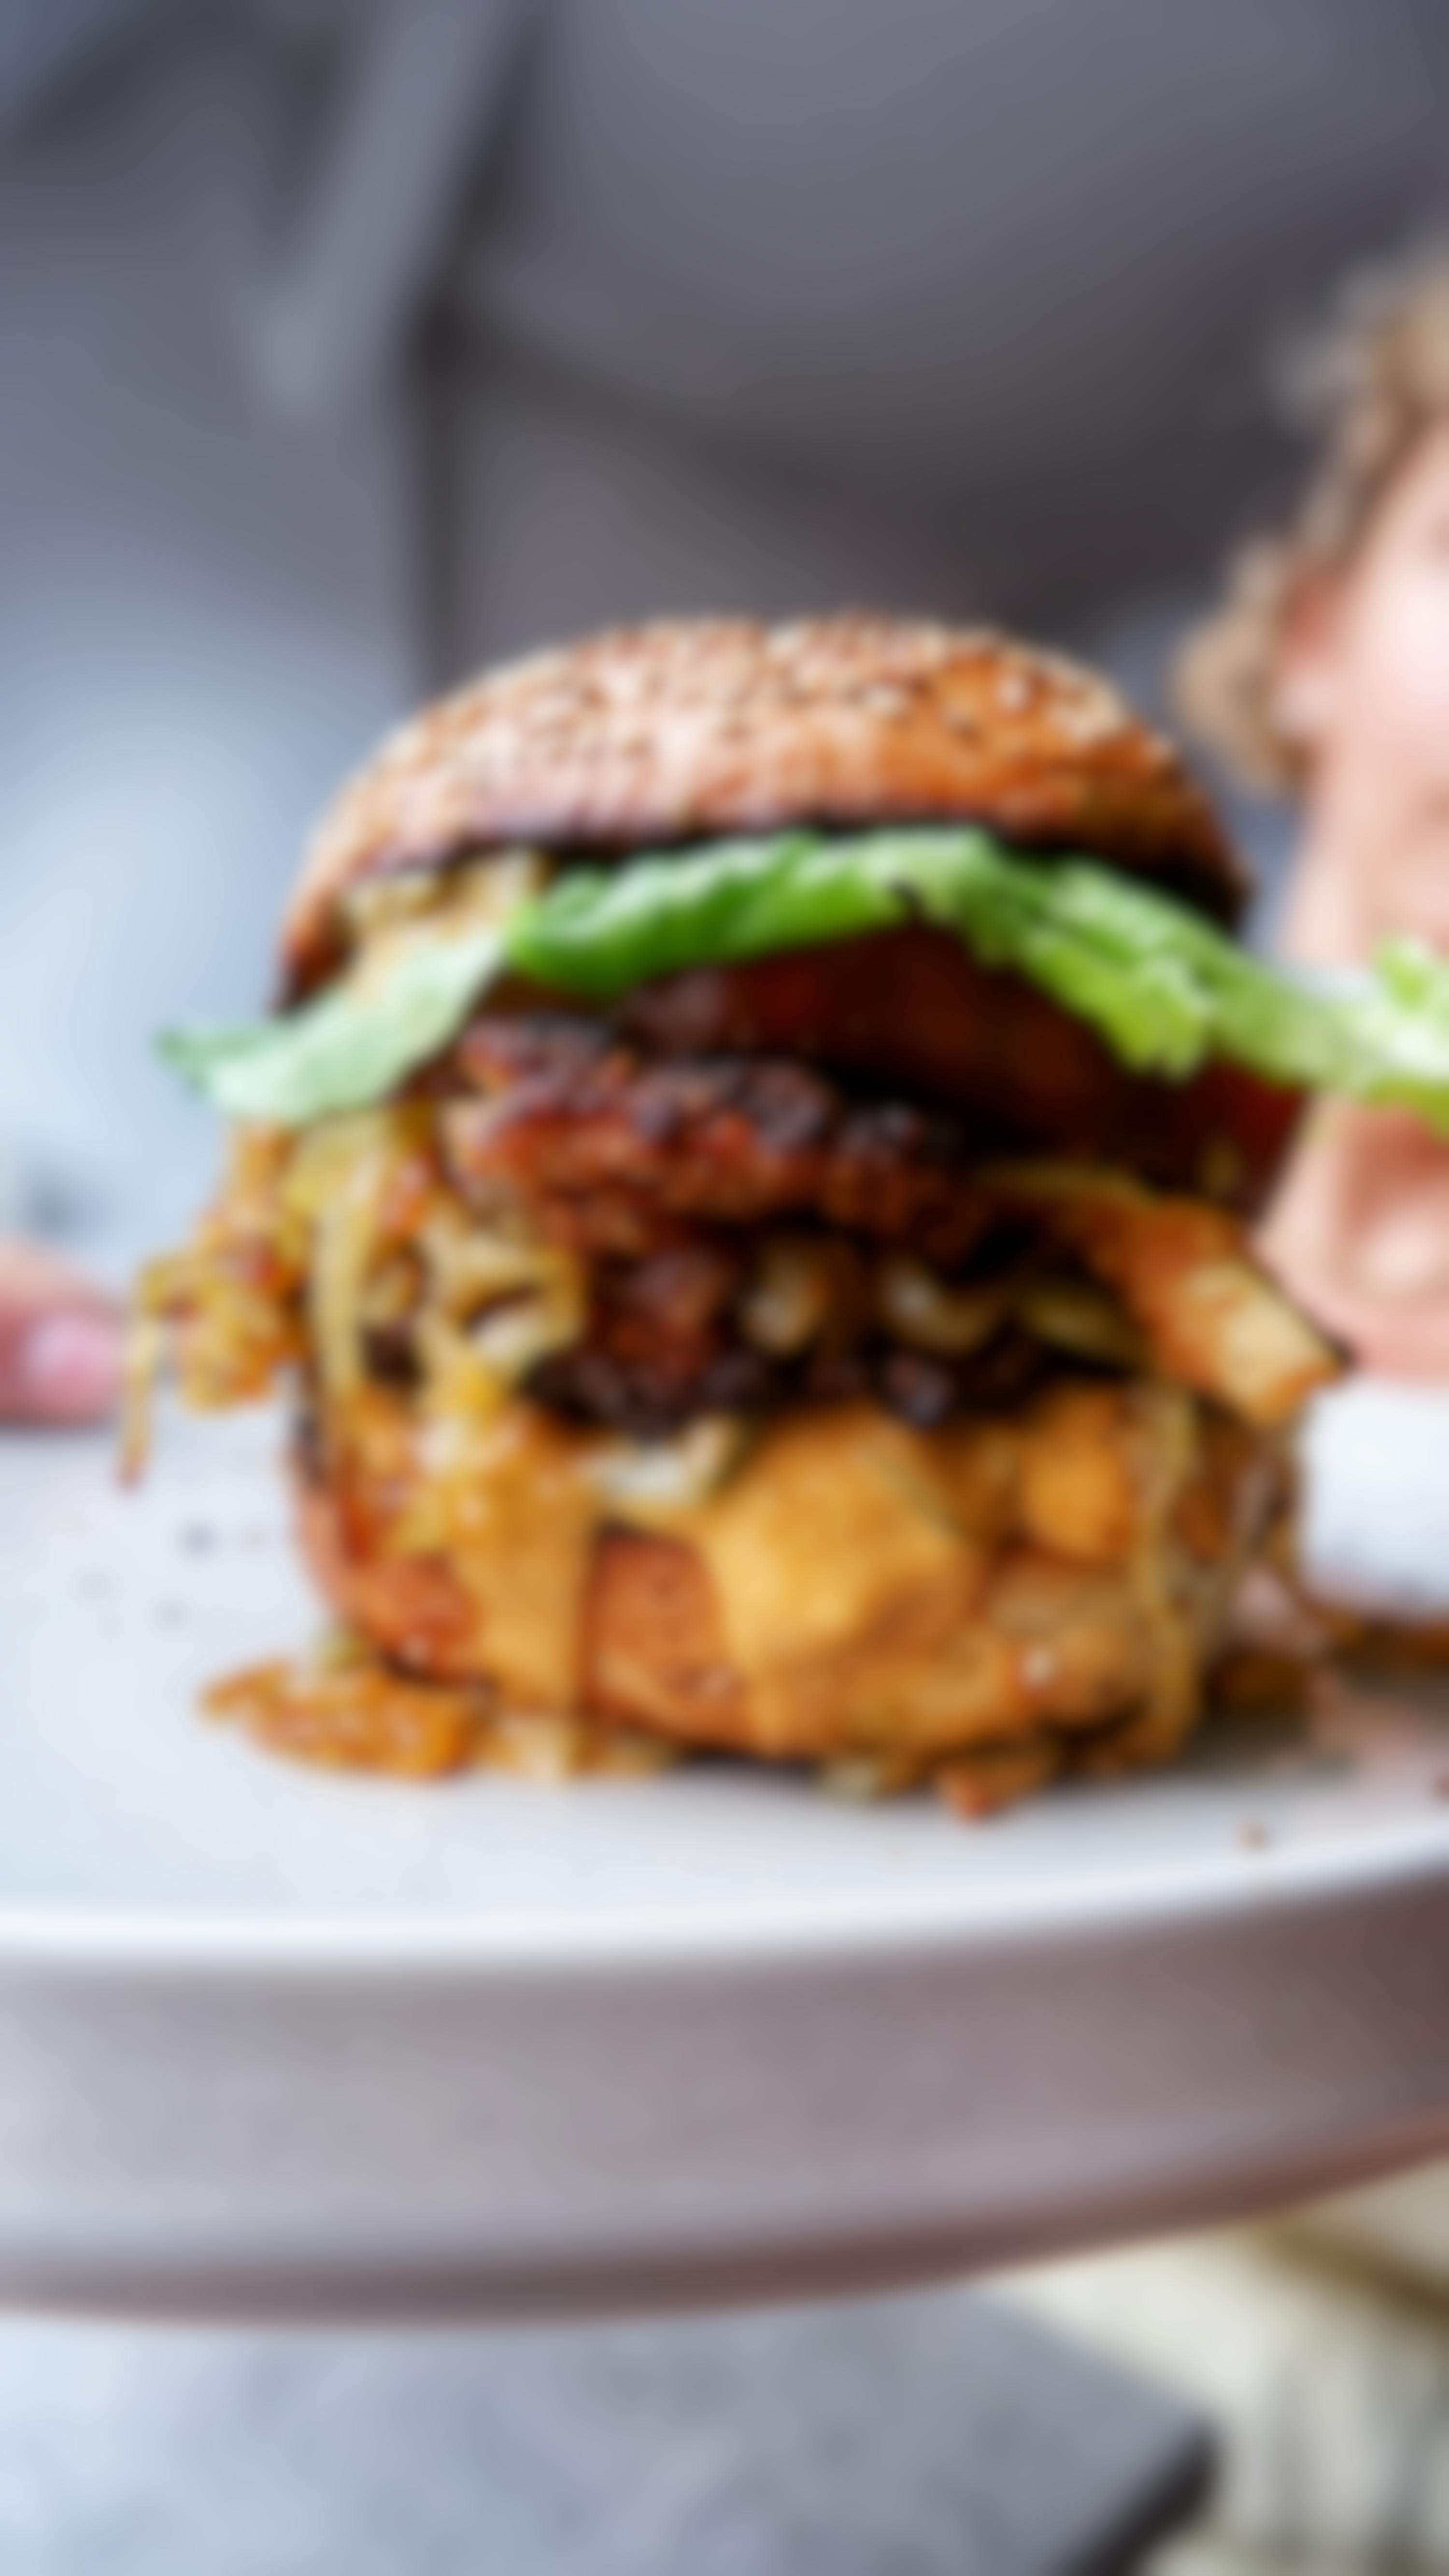 Burger vegan aux champignons frits